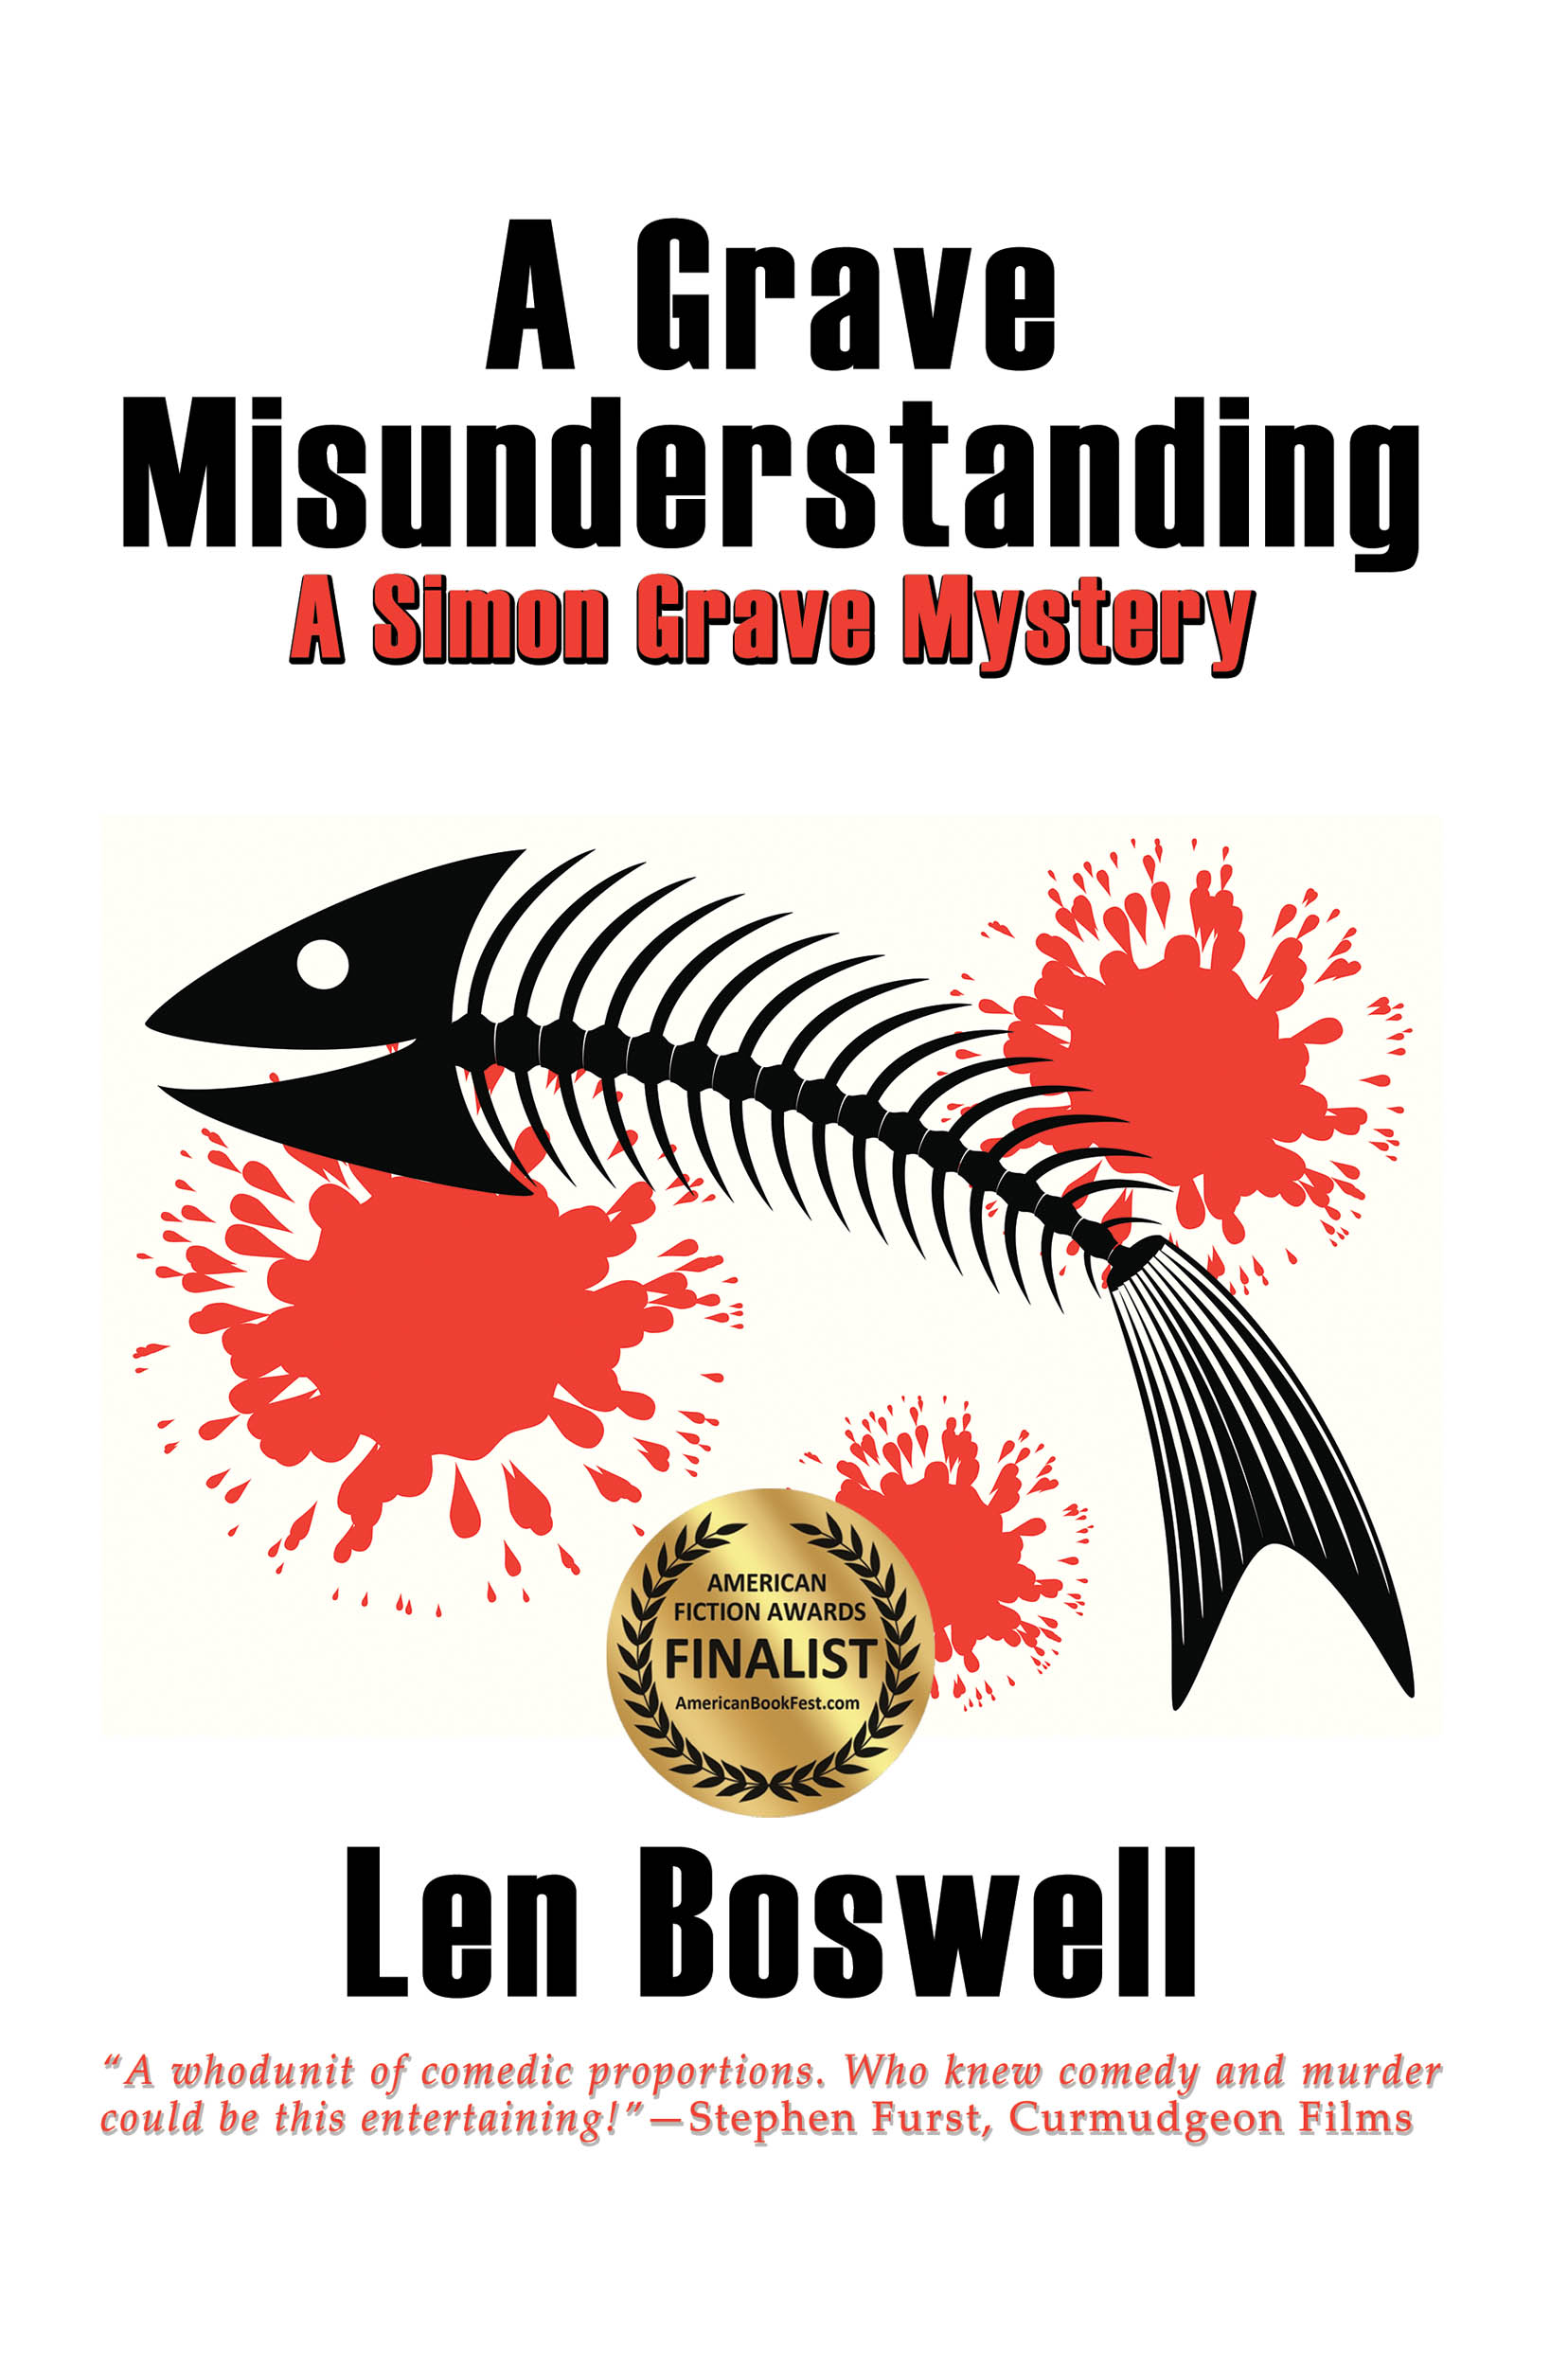 FREE: A Grave Misunderstanding by Len Boswell